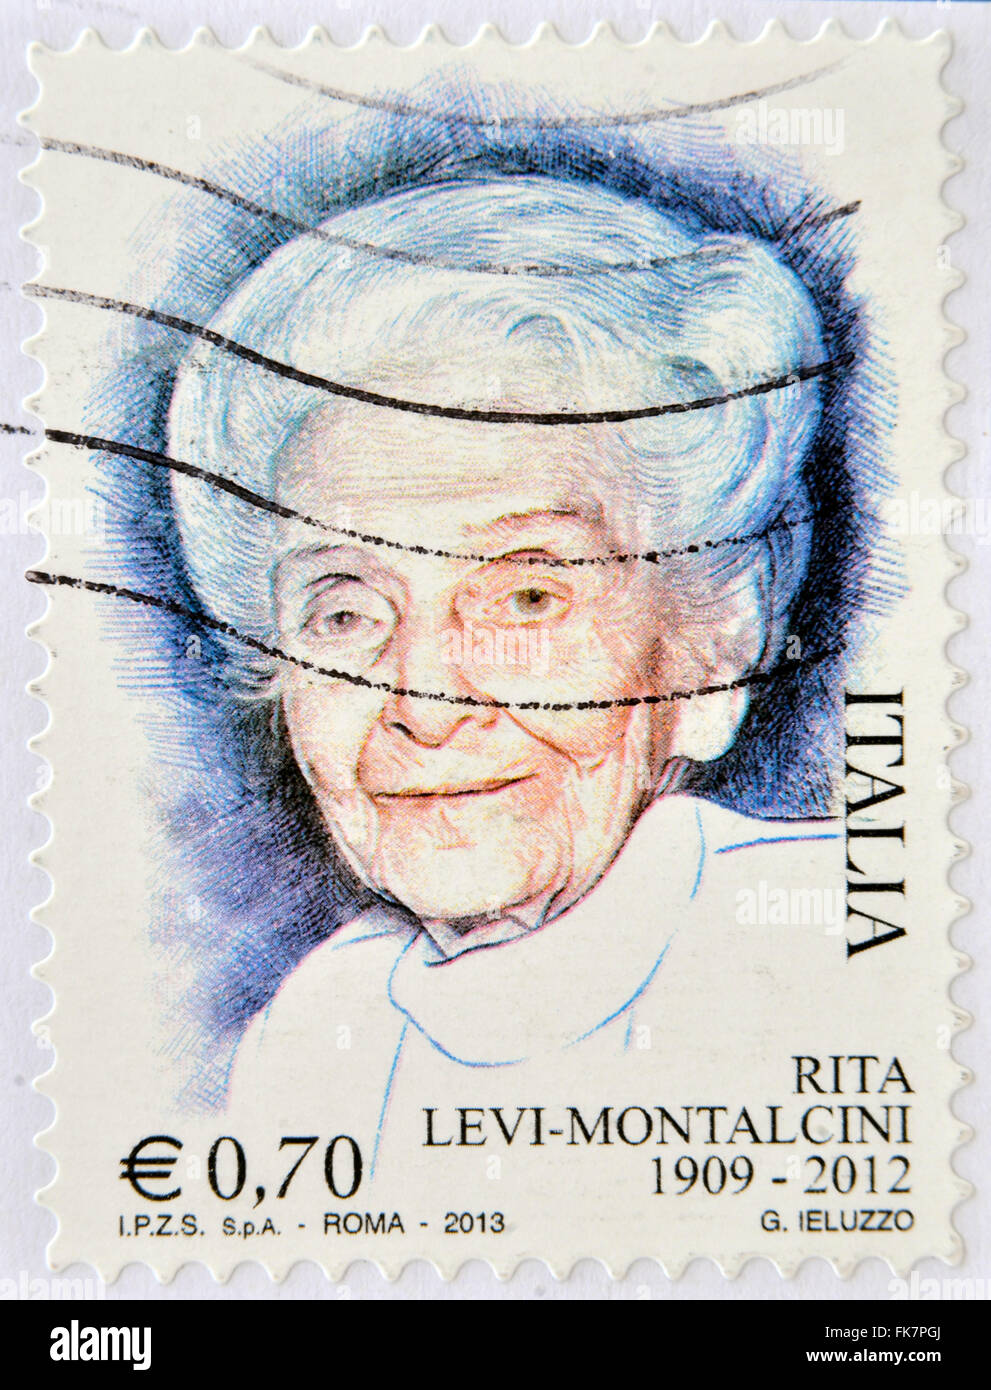 ITALY - CIRCA 2013: A stamp printed in Italy shows Rita Levi-Montalcini, circa 2013 Stock Photo